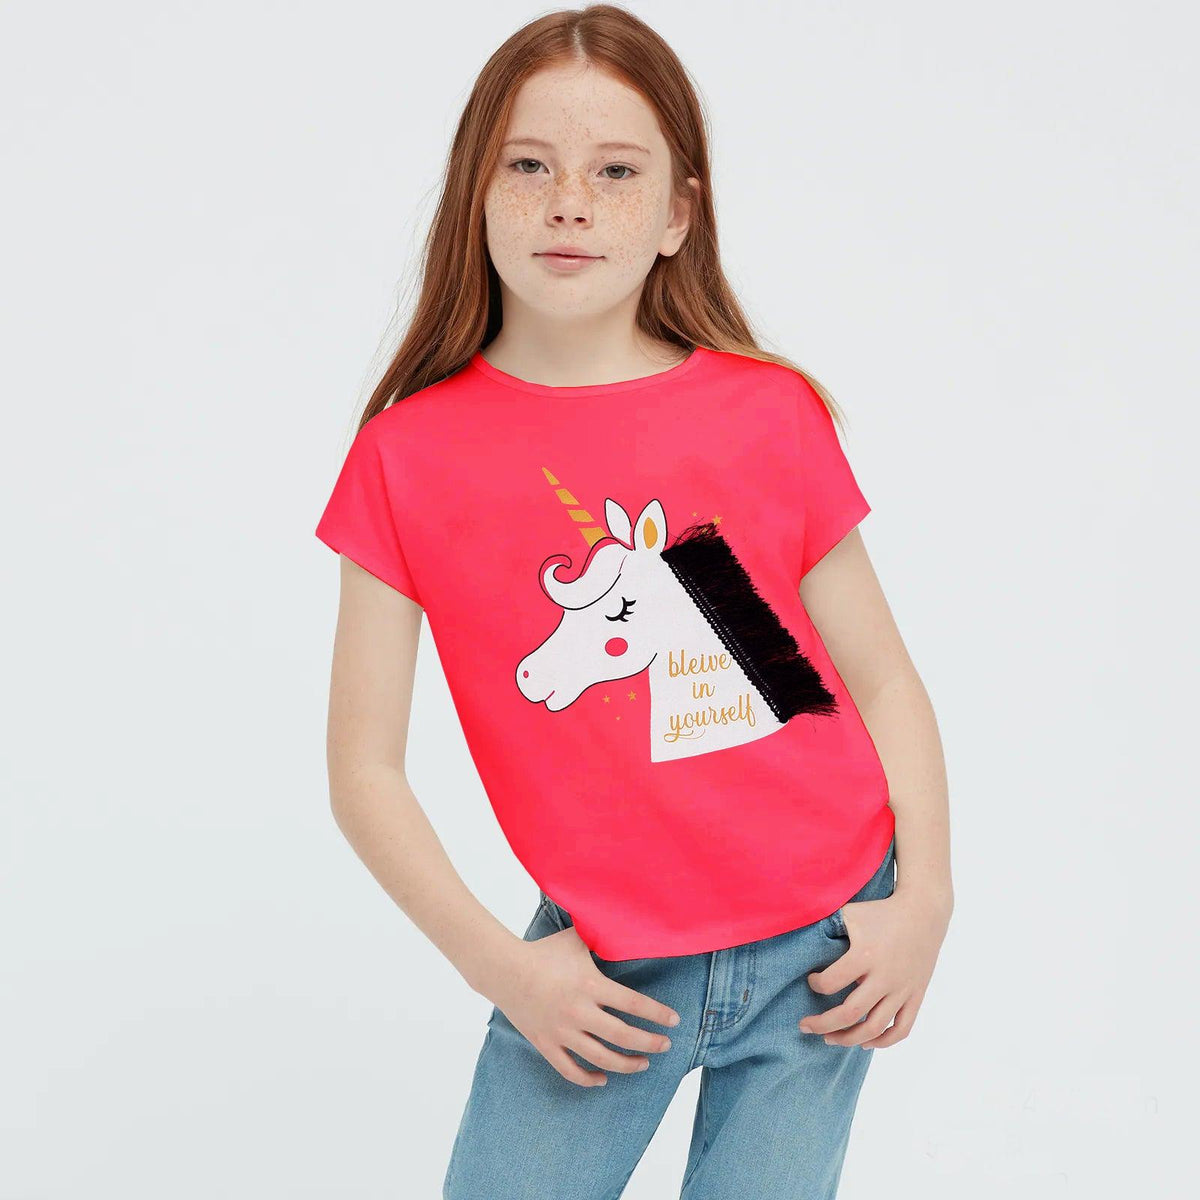 Girls Unicorn Printed Soft Cotton T-Shirt 9 MONTH - 10 YRS (MI-10953) - Brands River